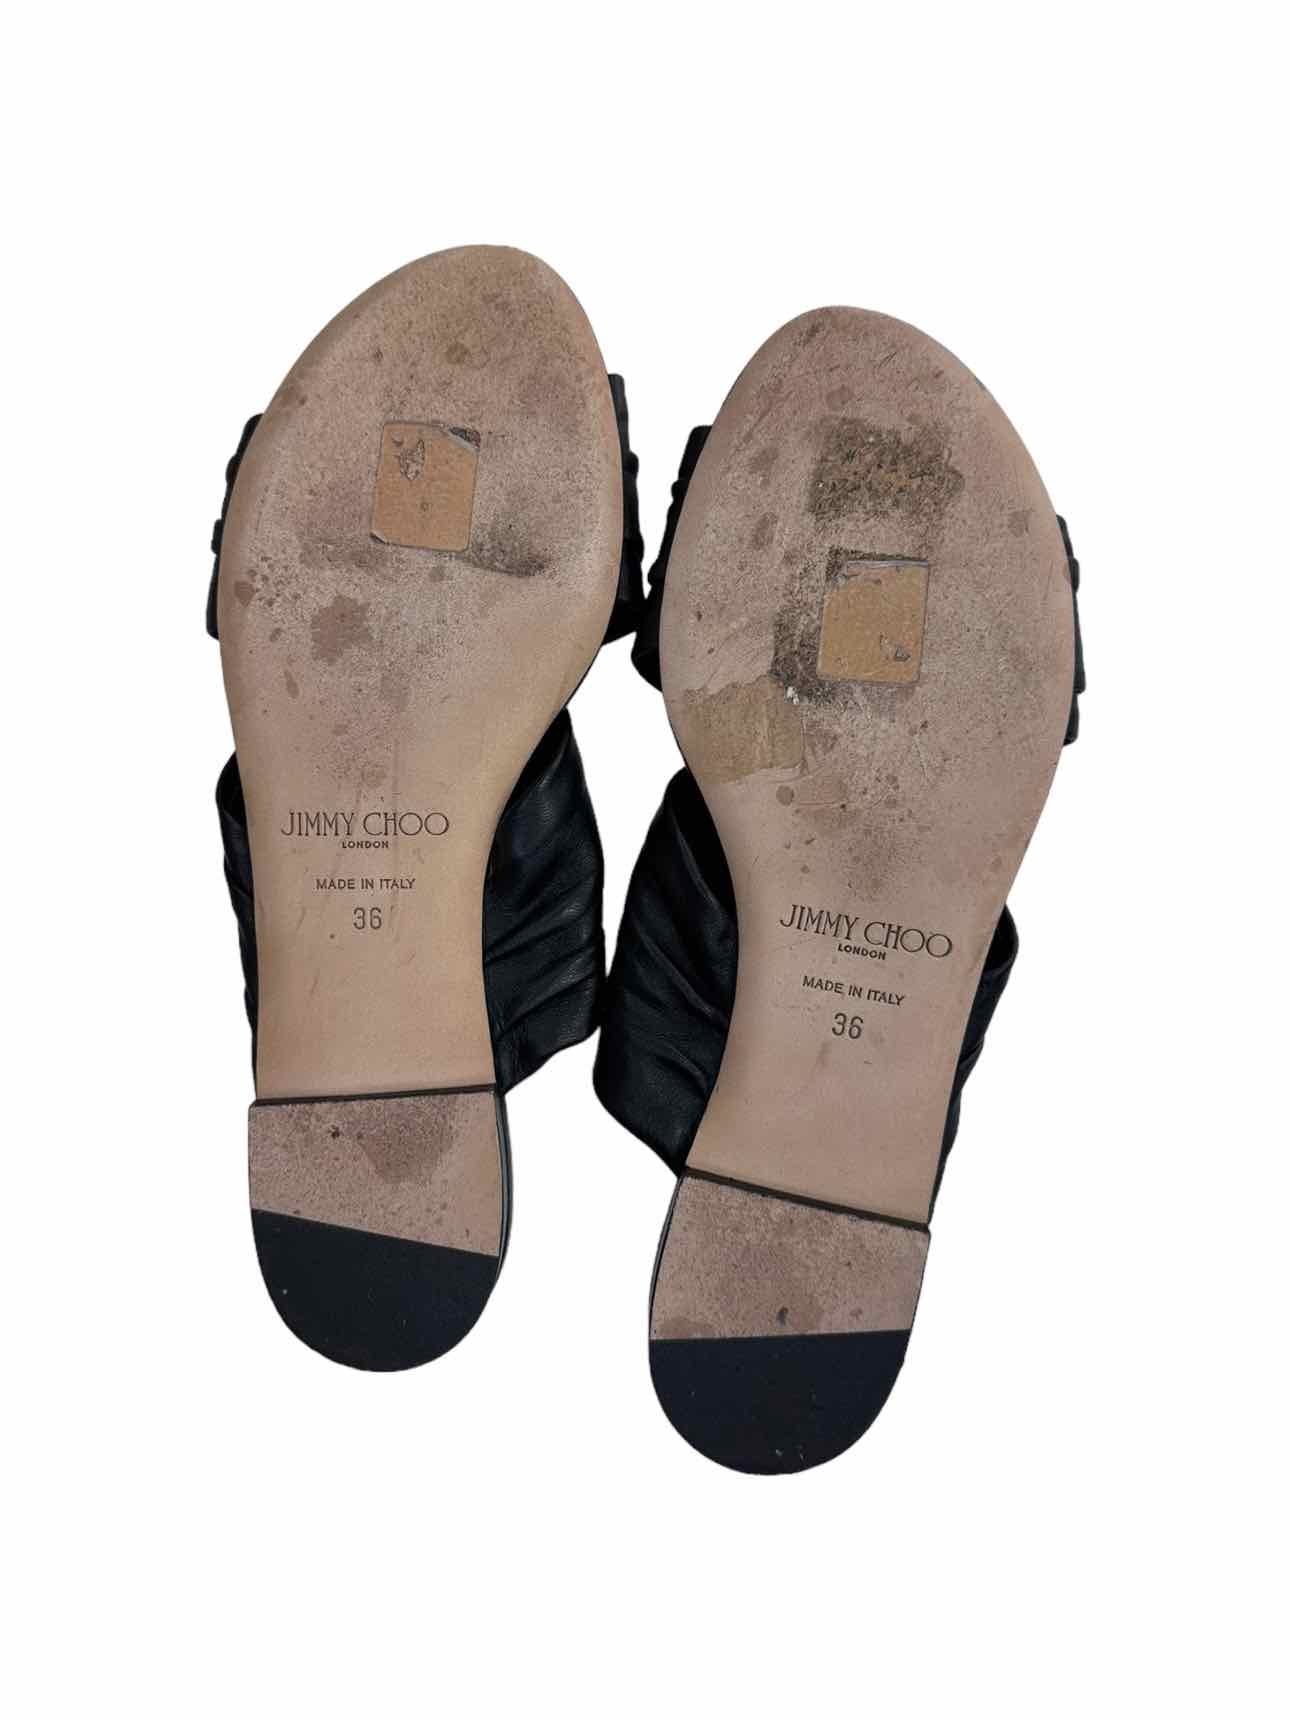 JIMMY CHOO Black Leather AVENUE Flat Sandals Size 6